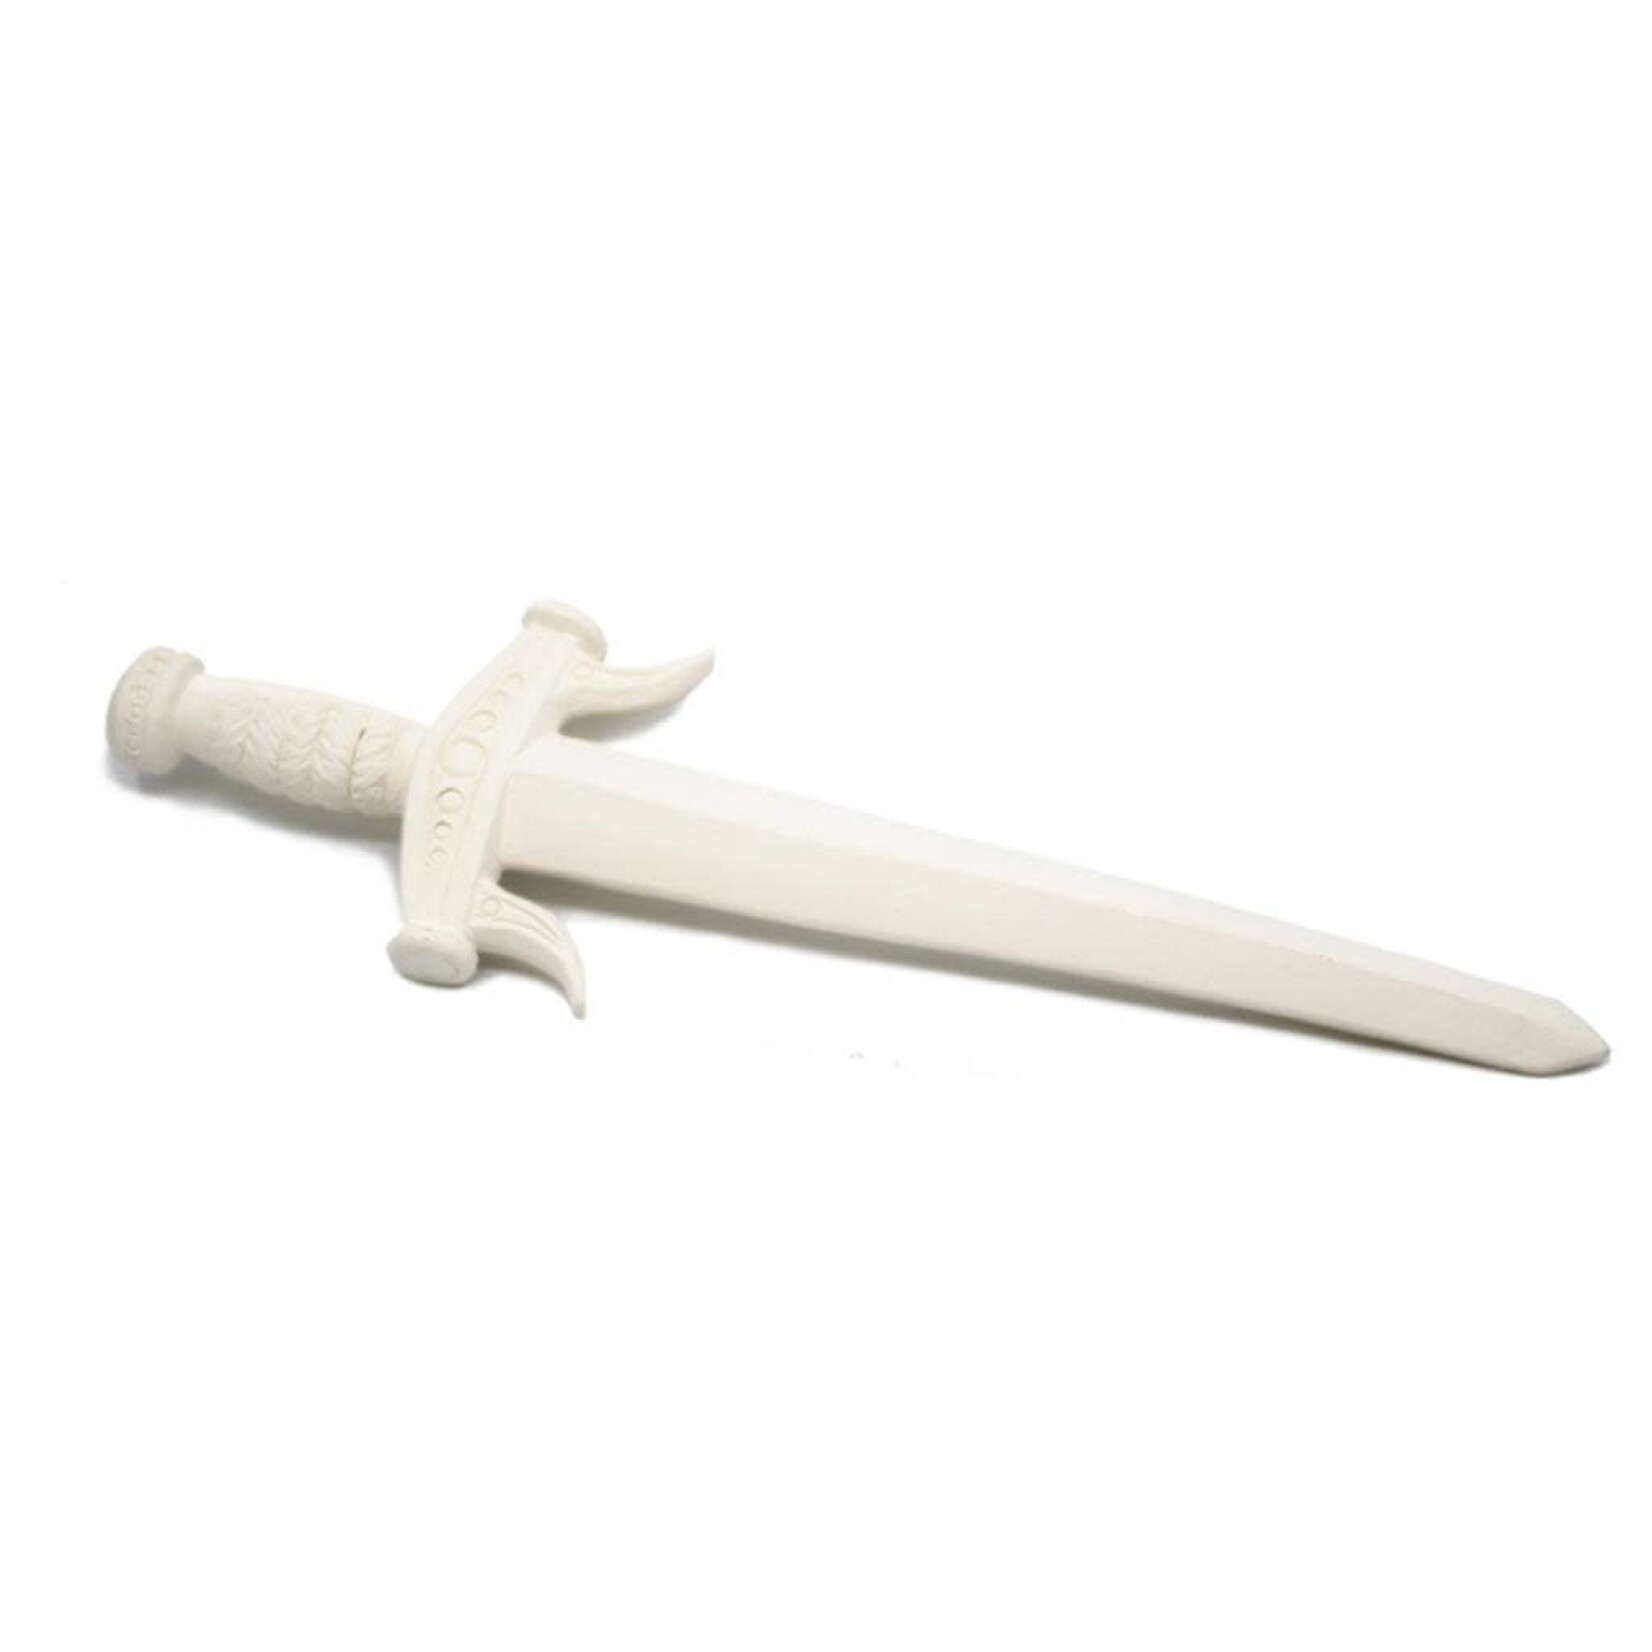 Medieval Sword - 15L X 4.25W